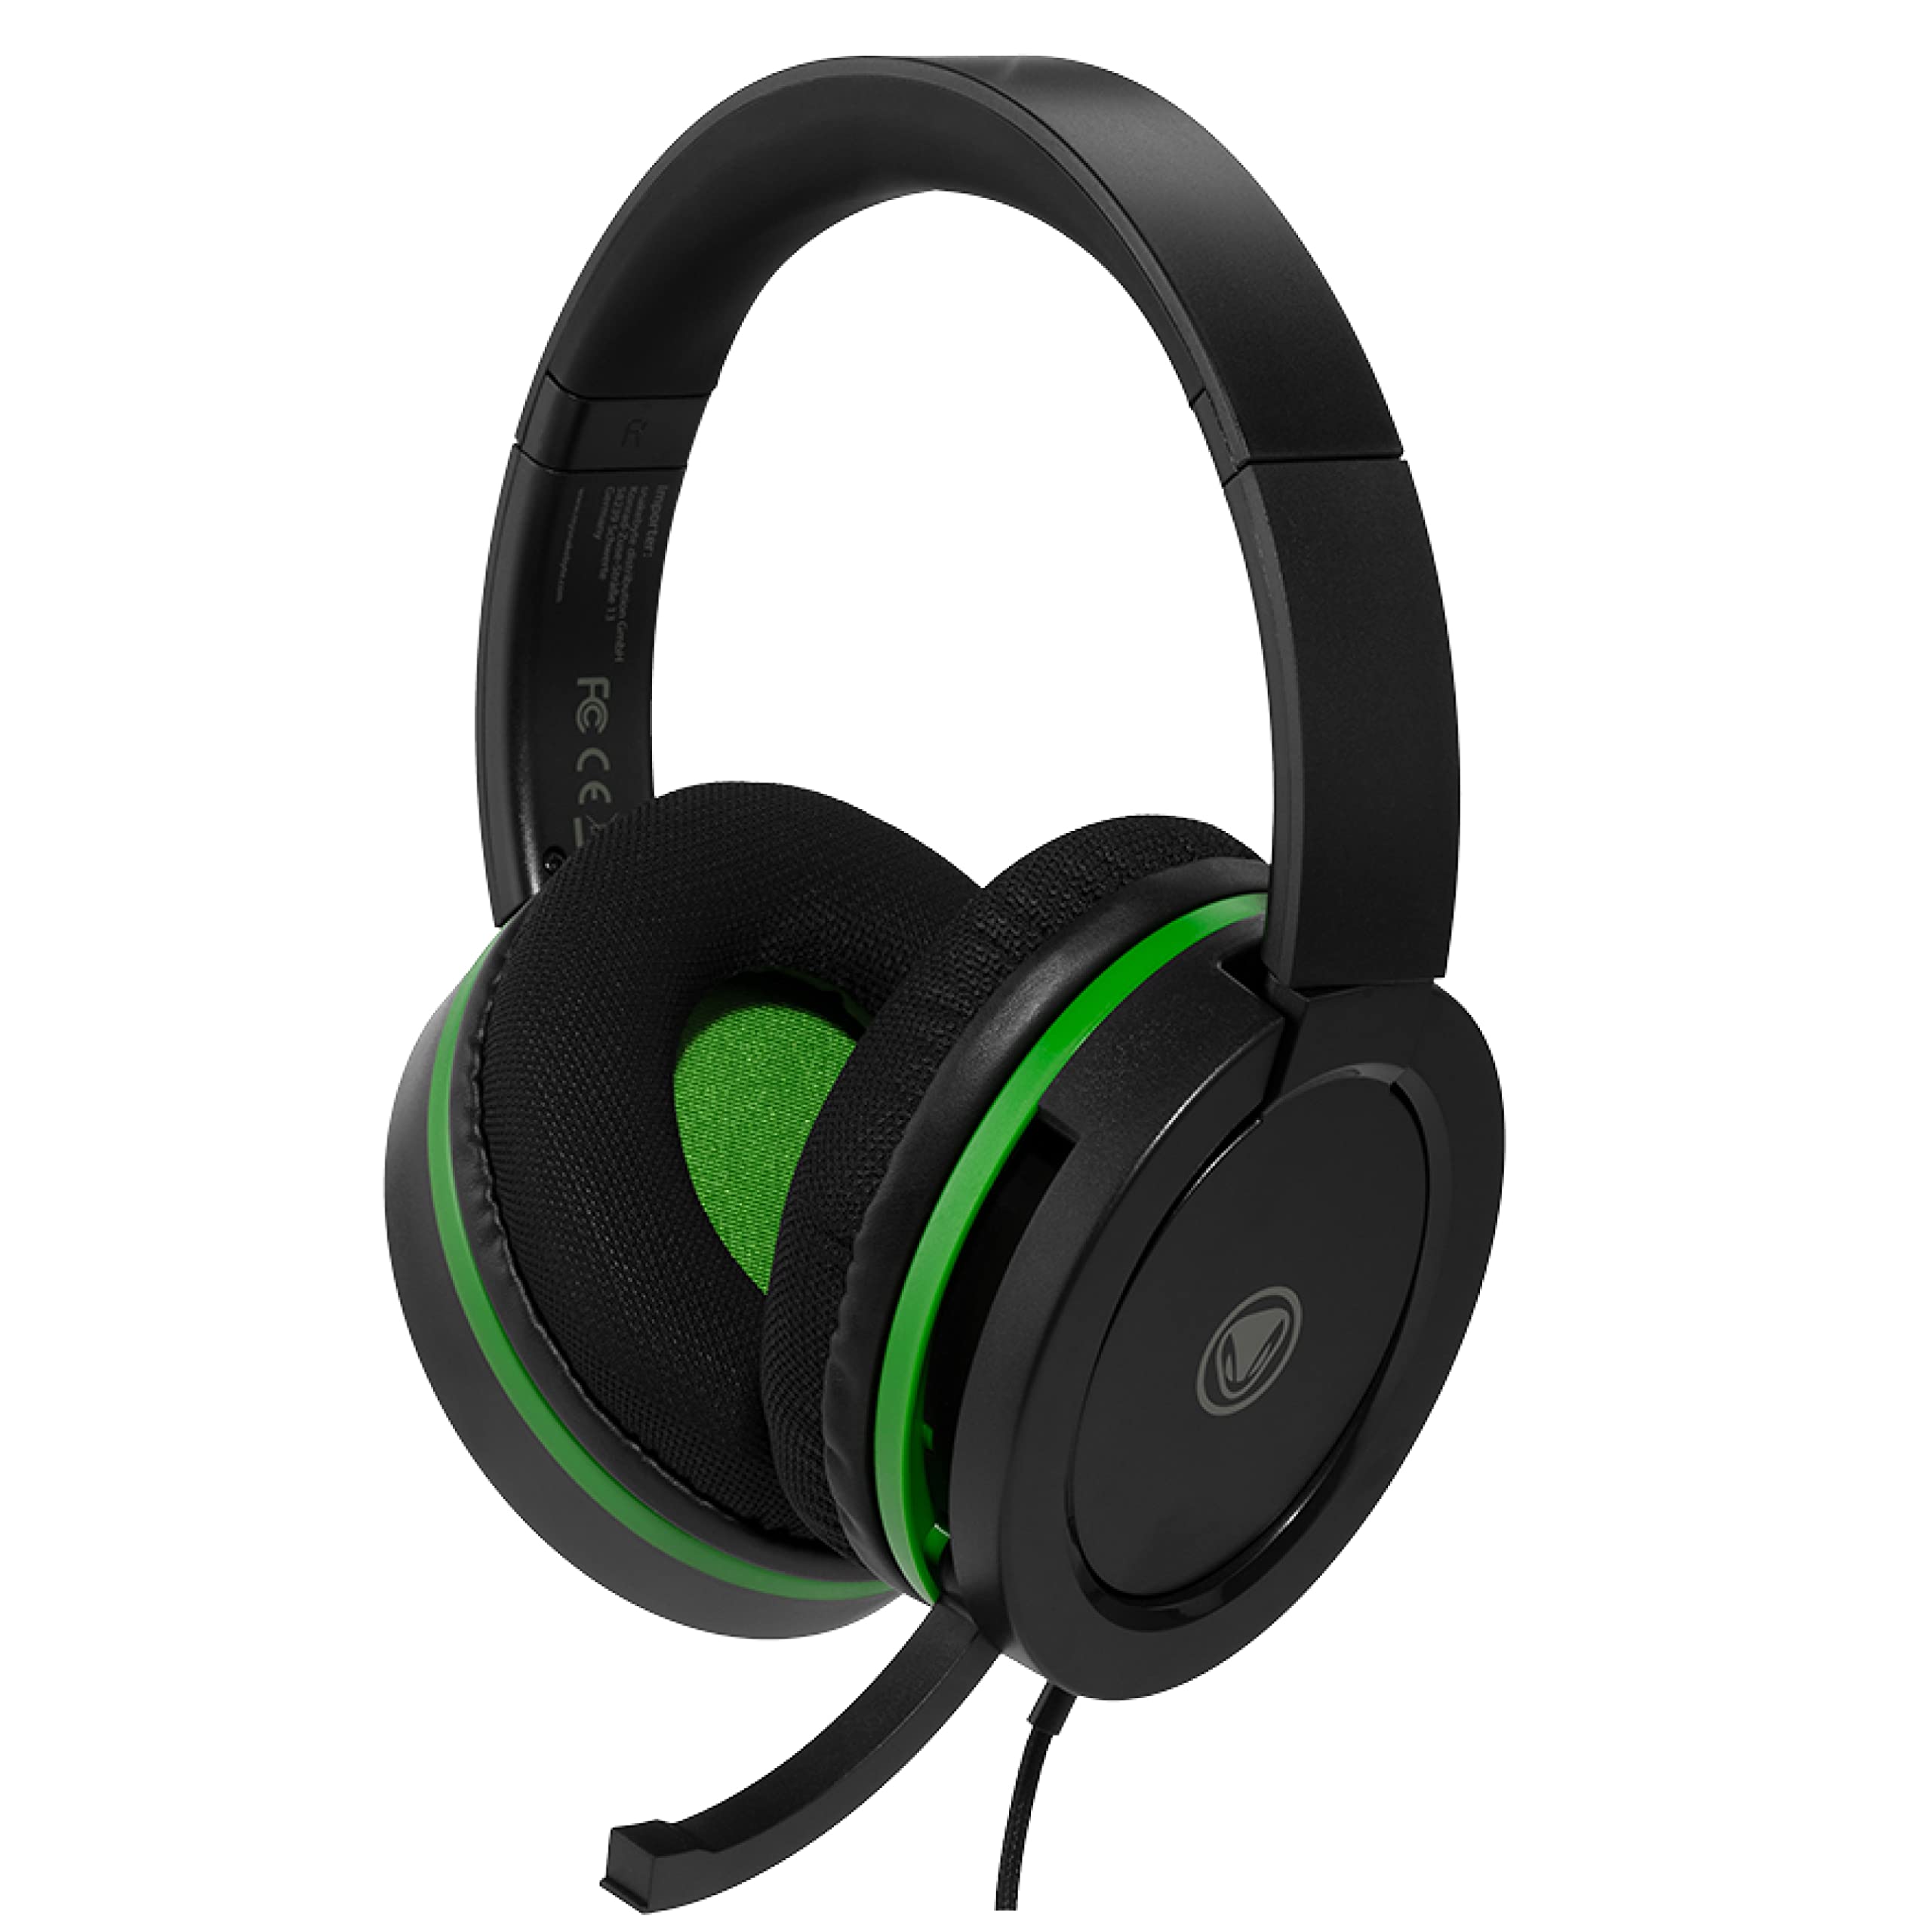 snakebyte Xbox One HEADSET X PRO - Stereo Gaming Headset mit Mikrofon für die XBOX One / XBOX One X, 3,5mm Audio Stecker, kompatibel mit PC, PS4, VOIP, Telefonkonferenzen, VideoCall, Skype, Zoom, uvm